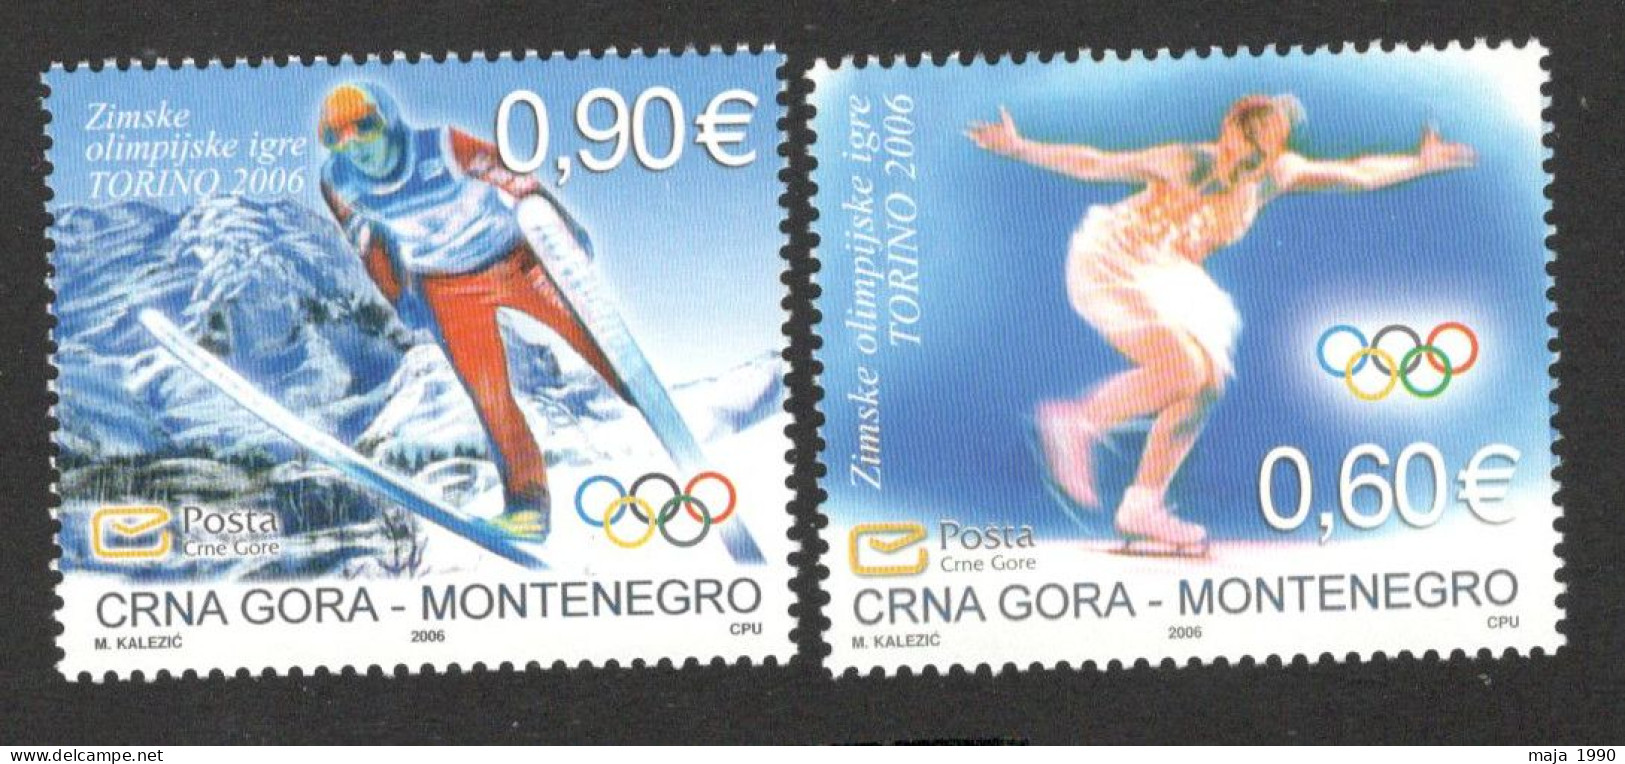 MONTENEGRO - MNH SET - SPORT - WINTER OLYMPIC GAMES, TURIN, ITALY - 2006. - Montenegro